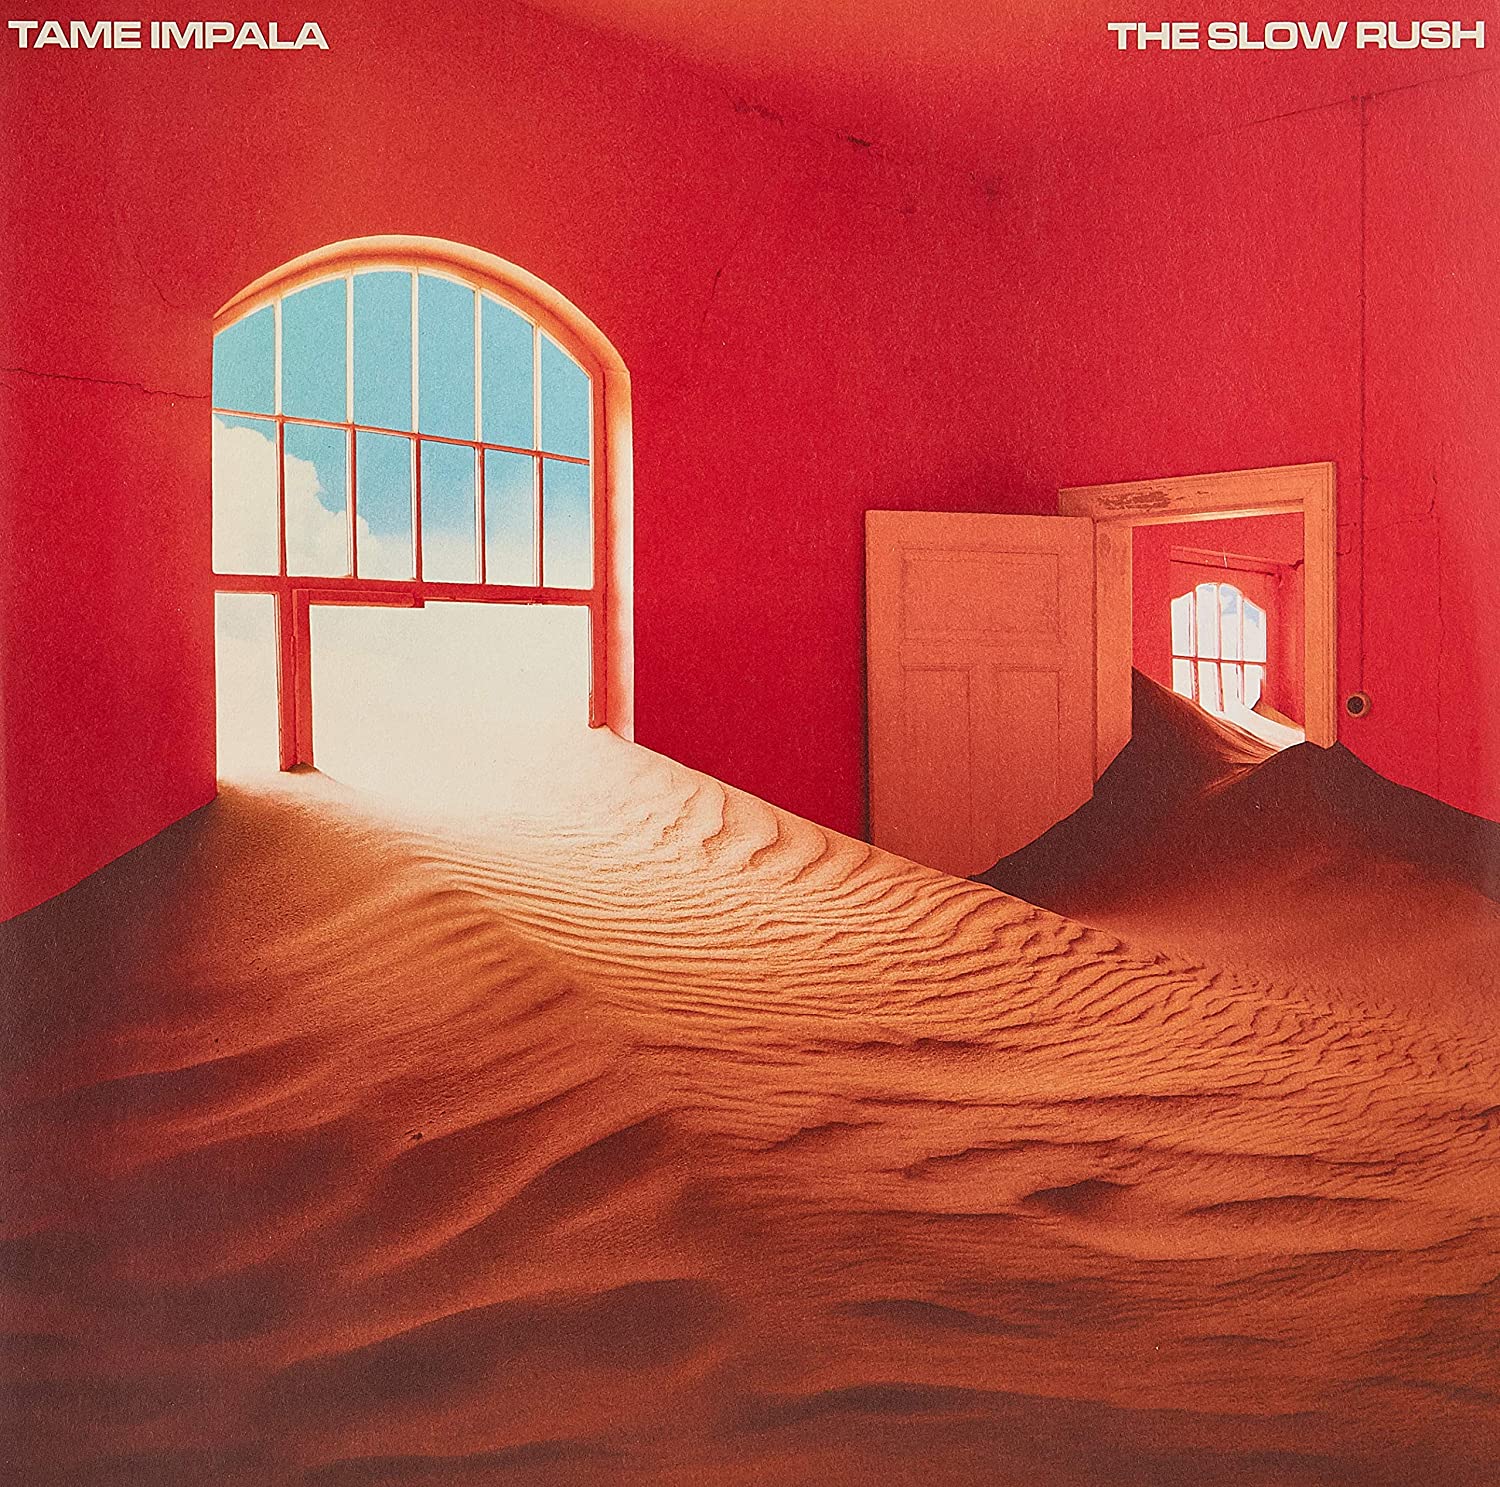 [DAMAGED] Tame Impala - The Slow Rush [Import] [Limited Creamy White Vinyl]